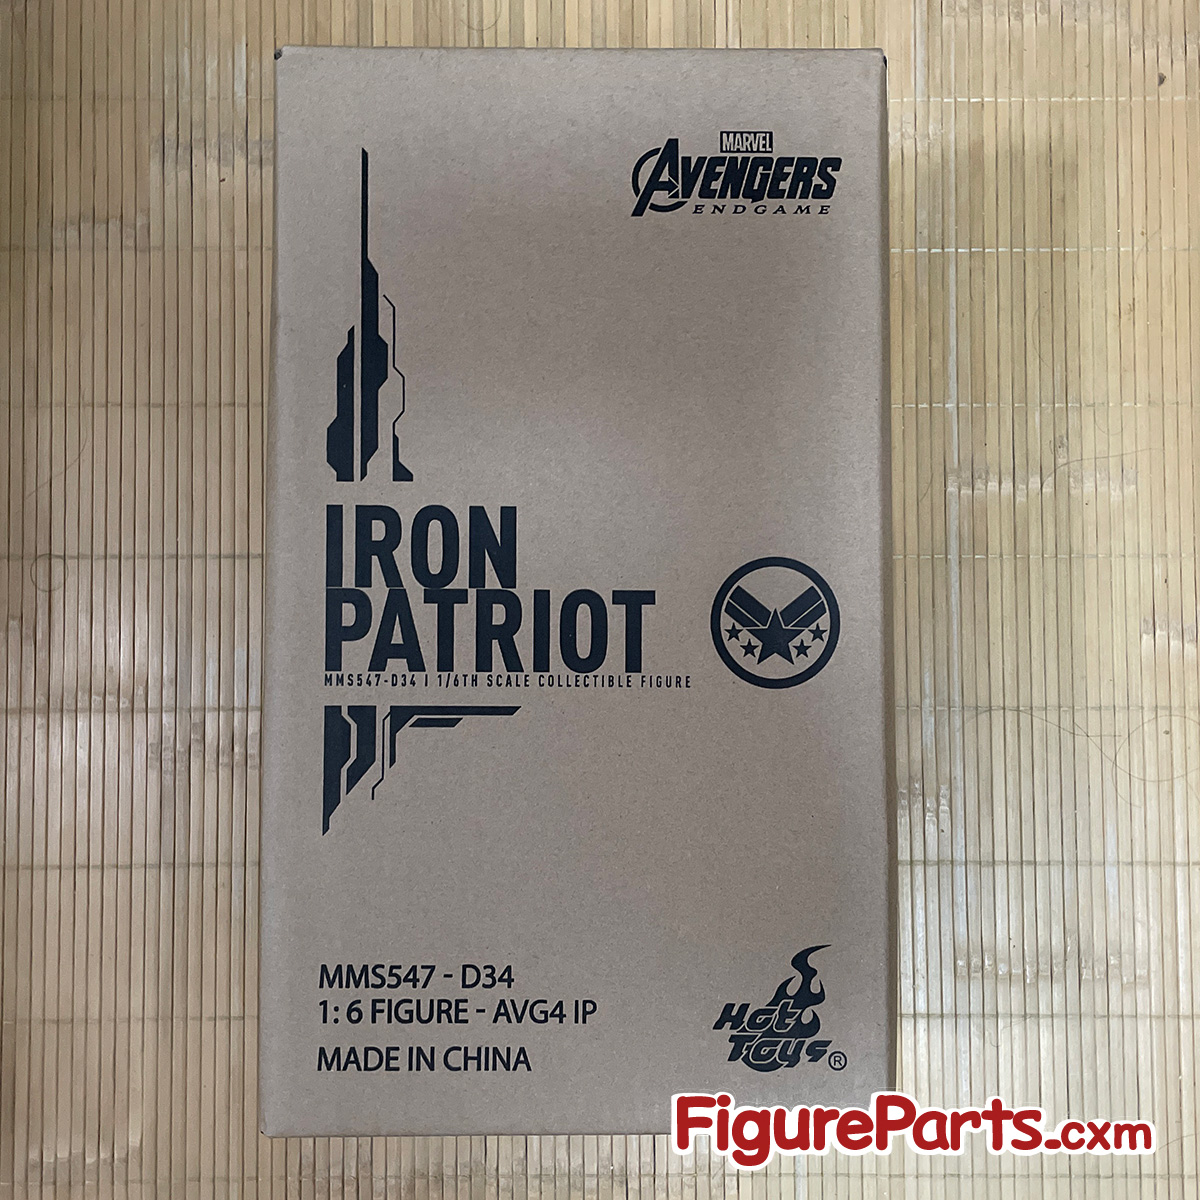 Iron Patriot - Avengers Endgame - Hot Toys mms547